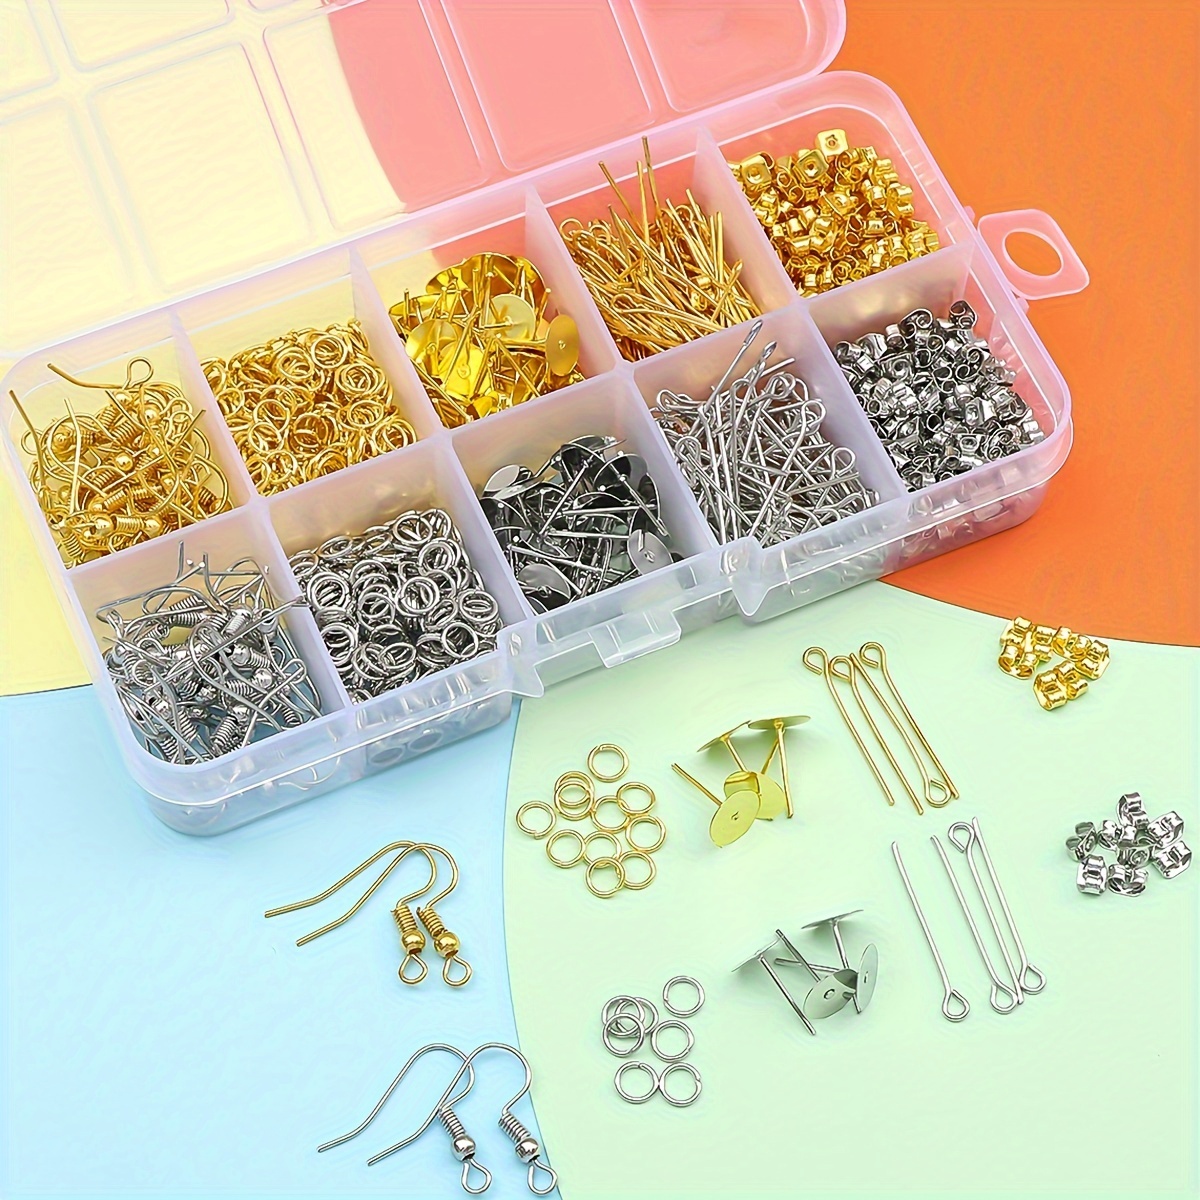 Jewellery Repair Kit in Jewellery Making Kits for sale